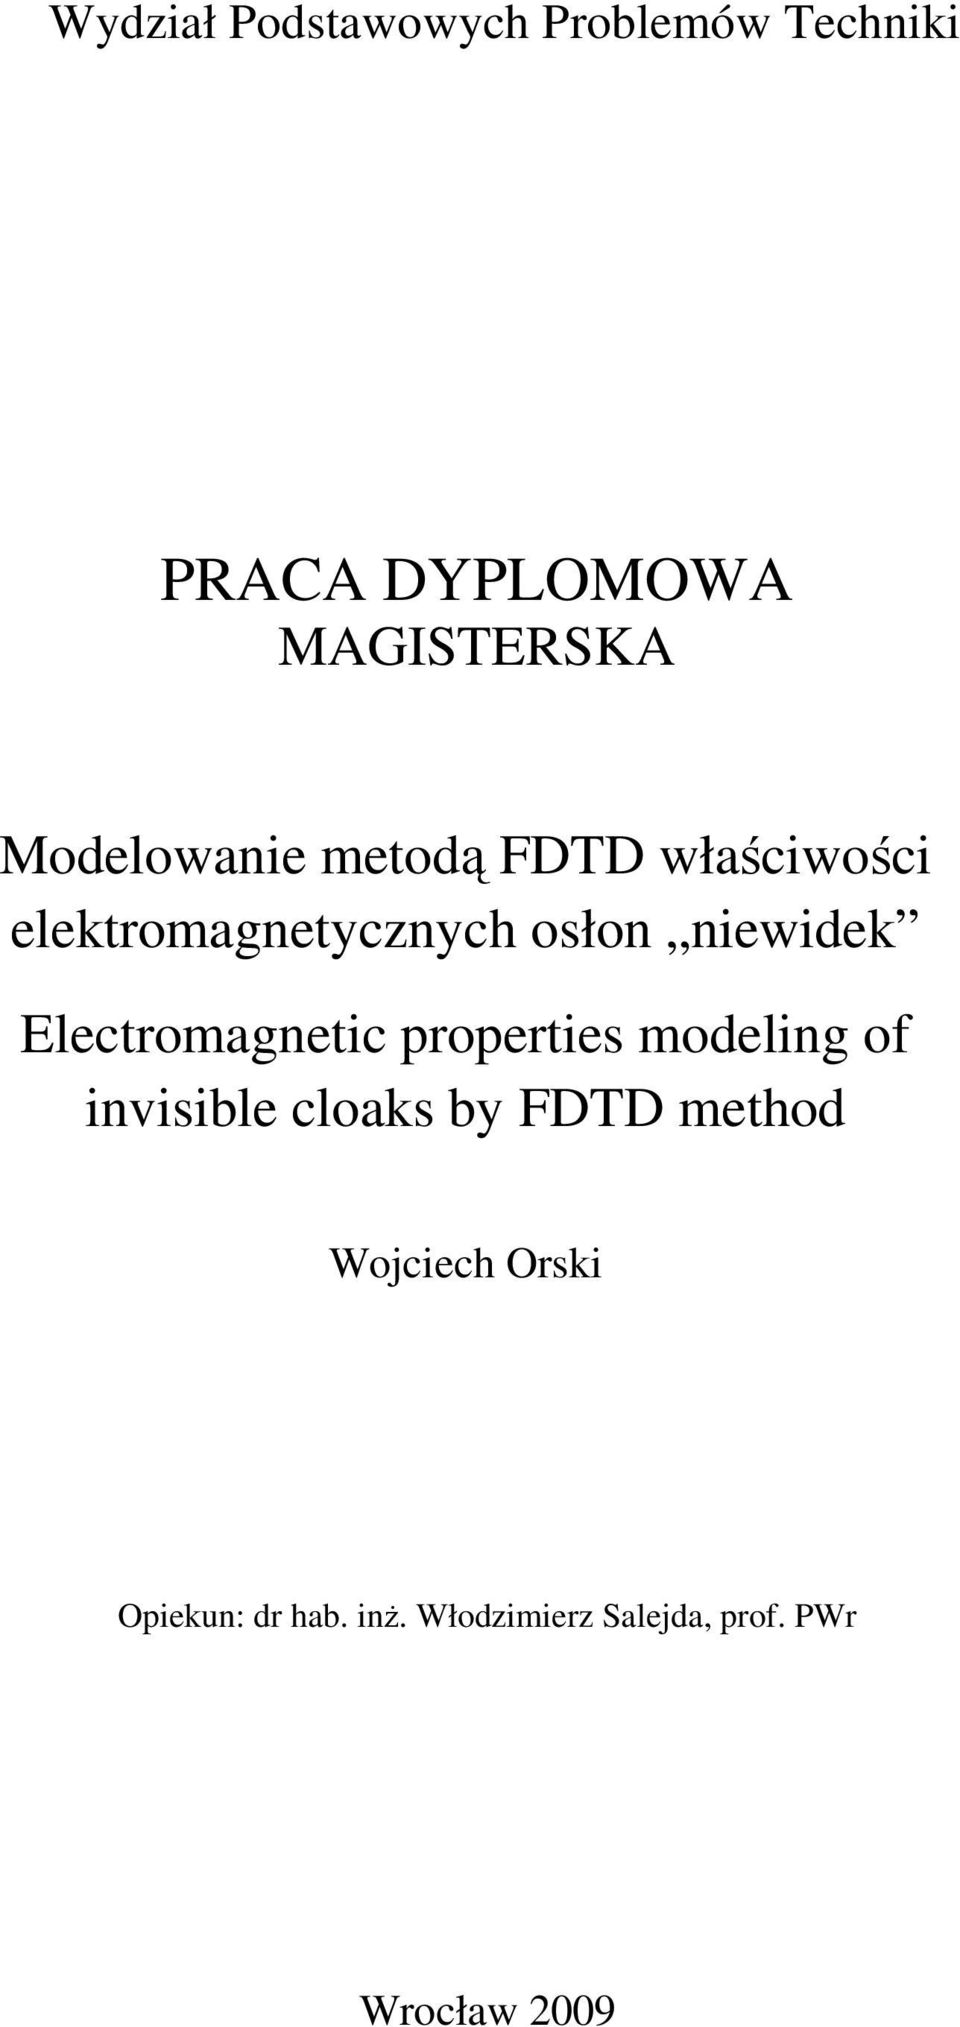 Electomagetic oetie modelig of iviible cloak b FDTD method